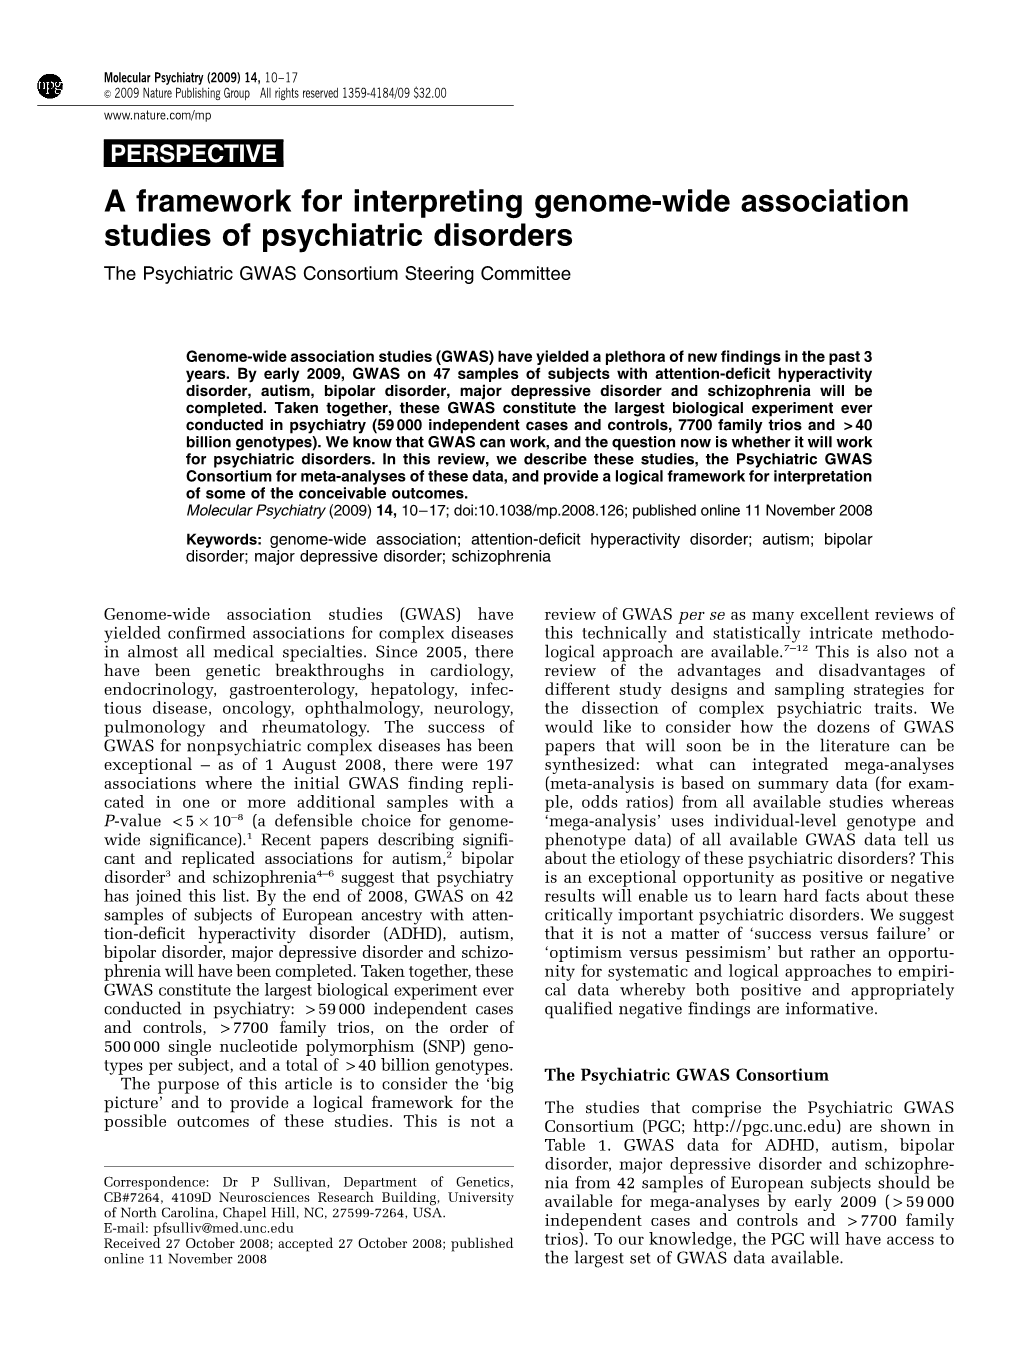 A Framework for Interpreting Genome-Wide Association Studies of Psychiatric Disorders the Psychiatric GWAS Consortium Steering Committee